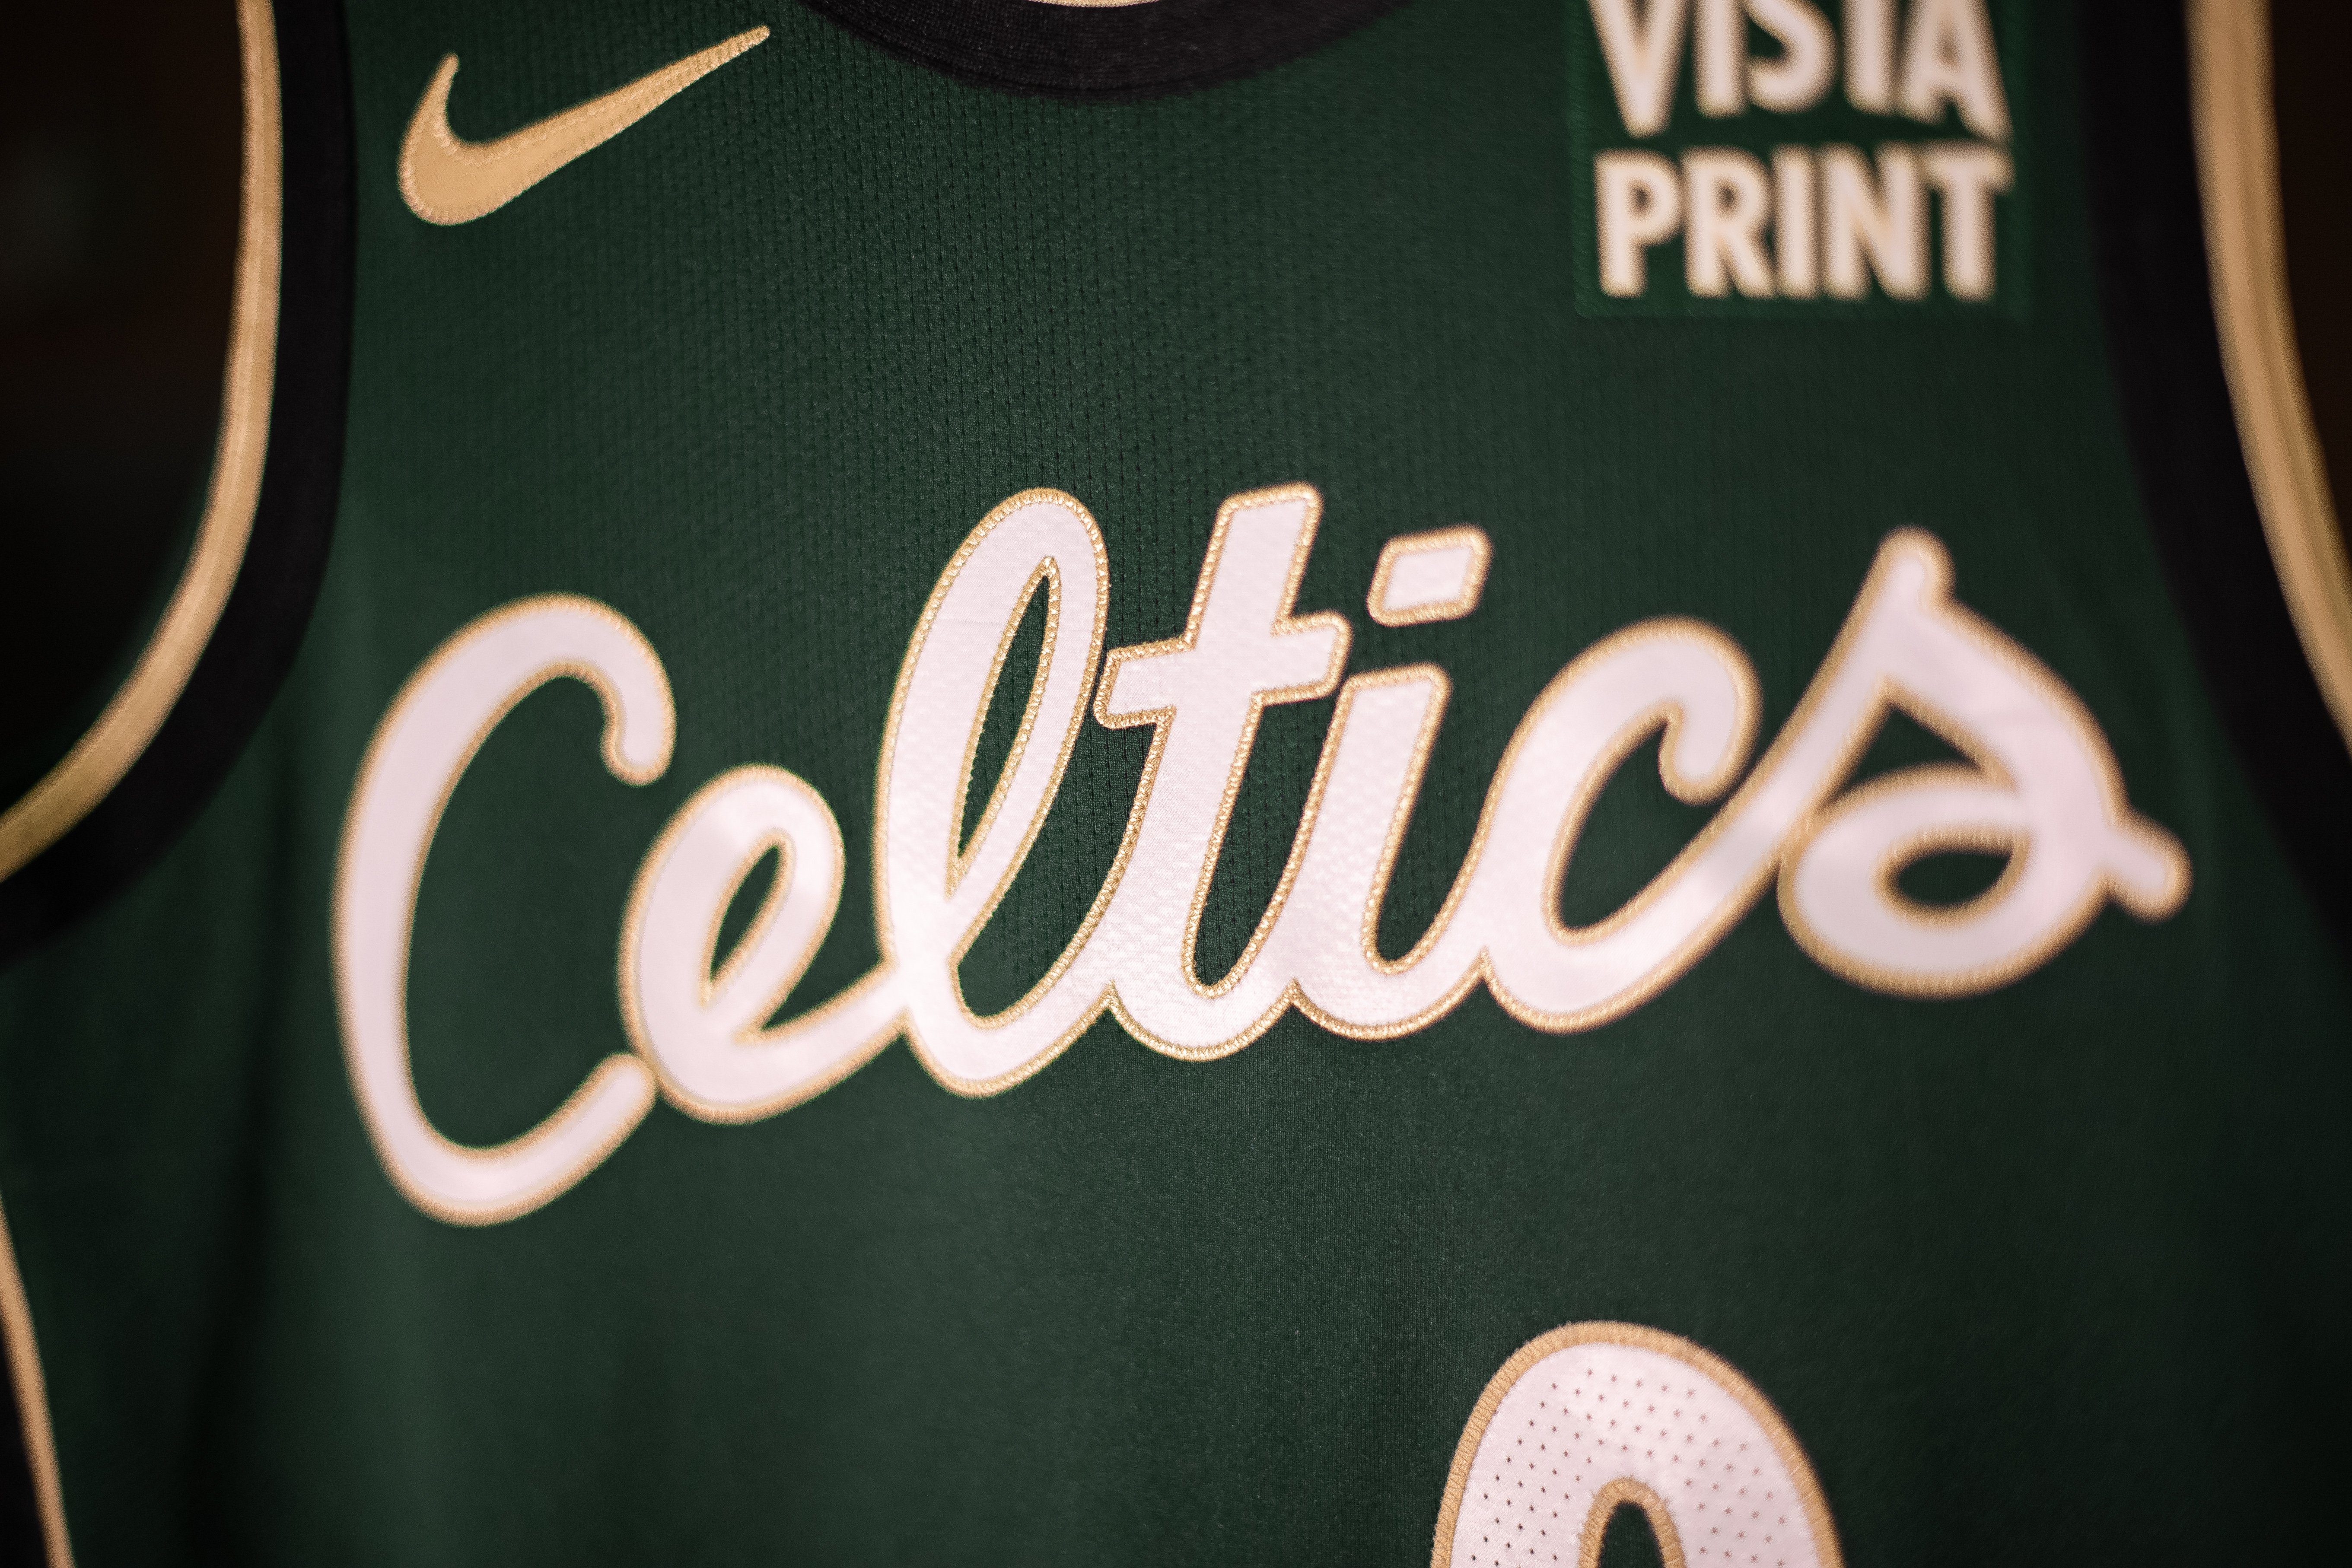 Celtics City Edition 2023: See photo of new jerseys honoring Bill Russell